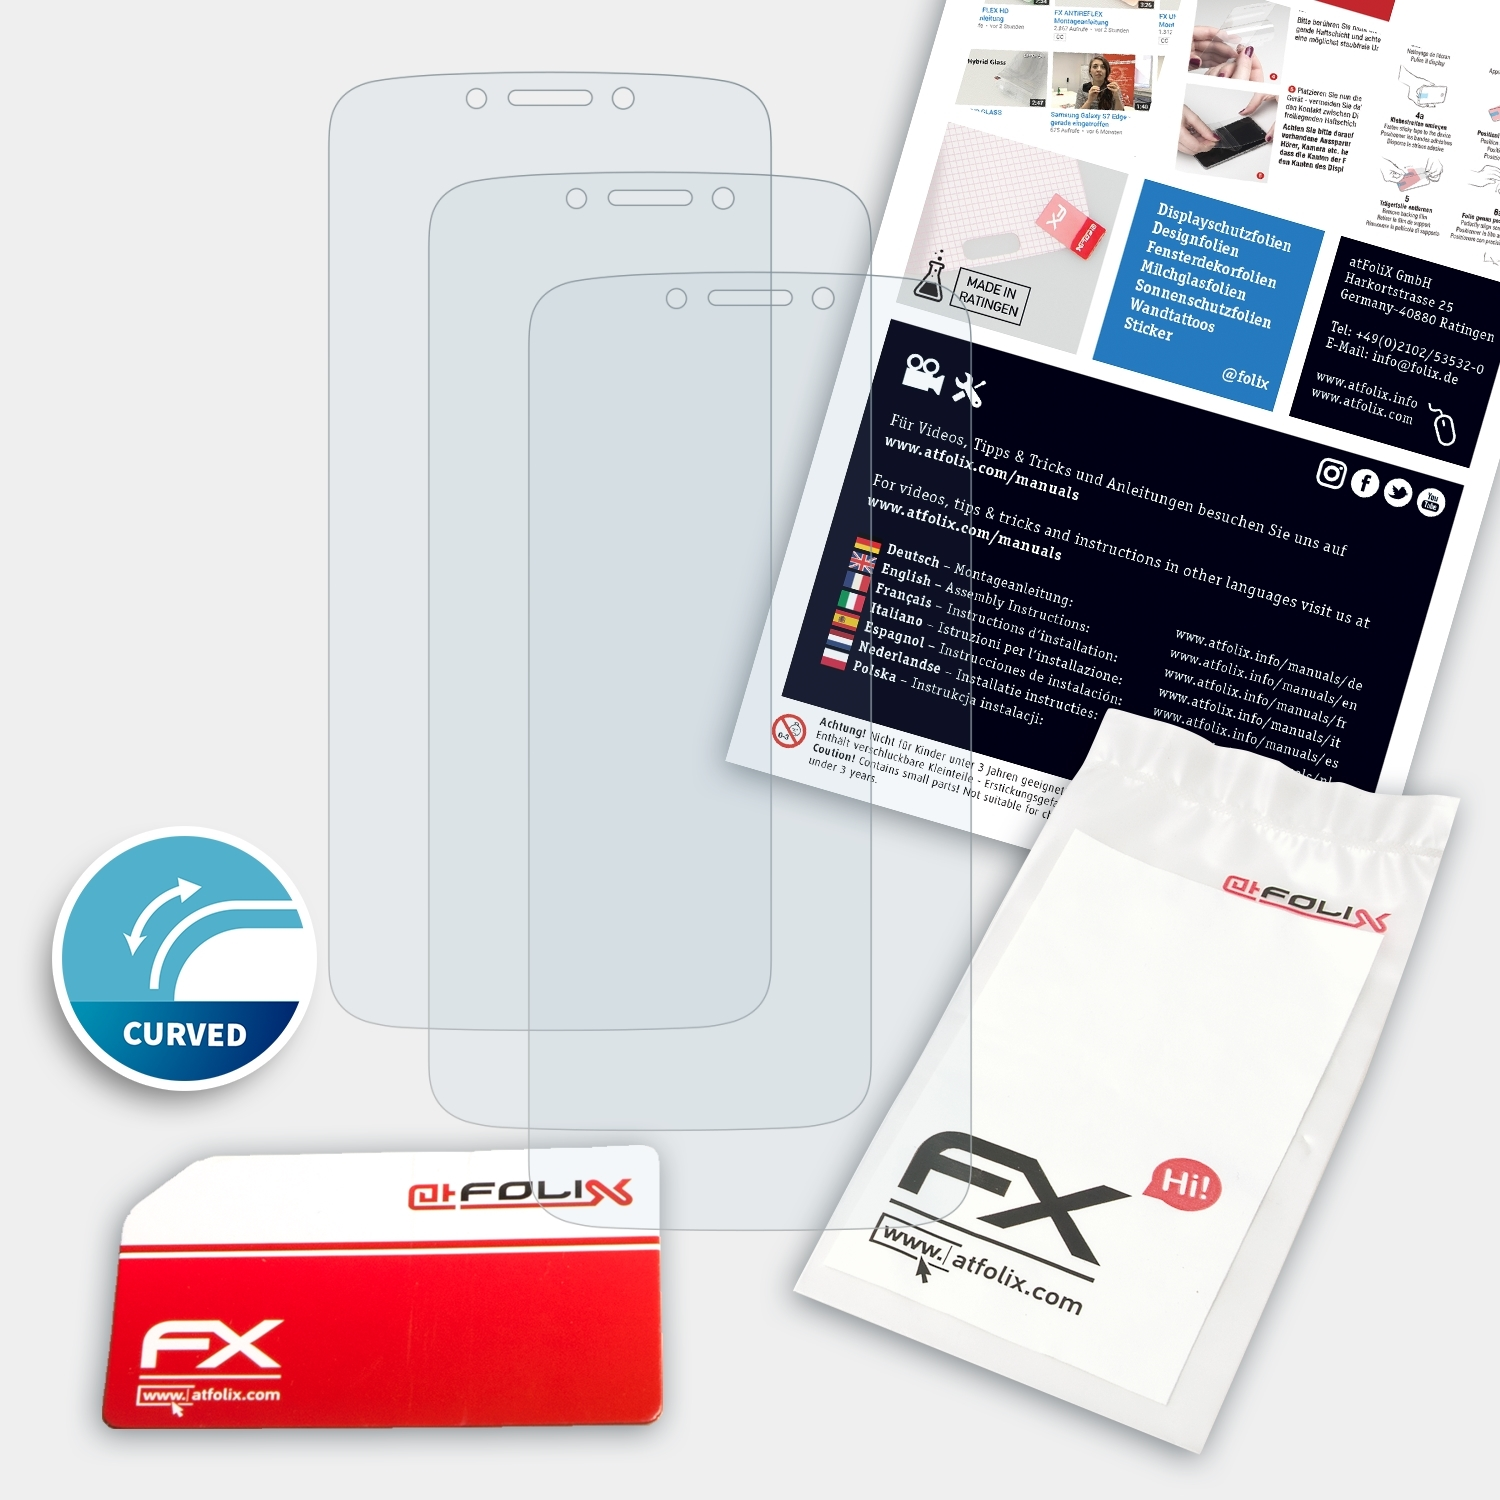 Displayschutz(für E5) FX-ActiFleX Motorola Moto ATFOLIX Lenovo 3x